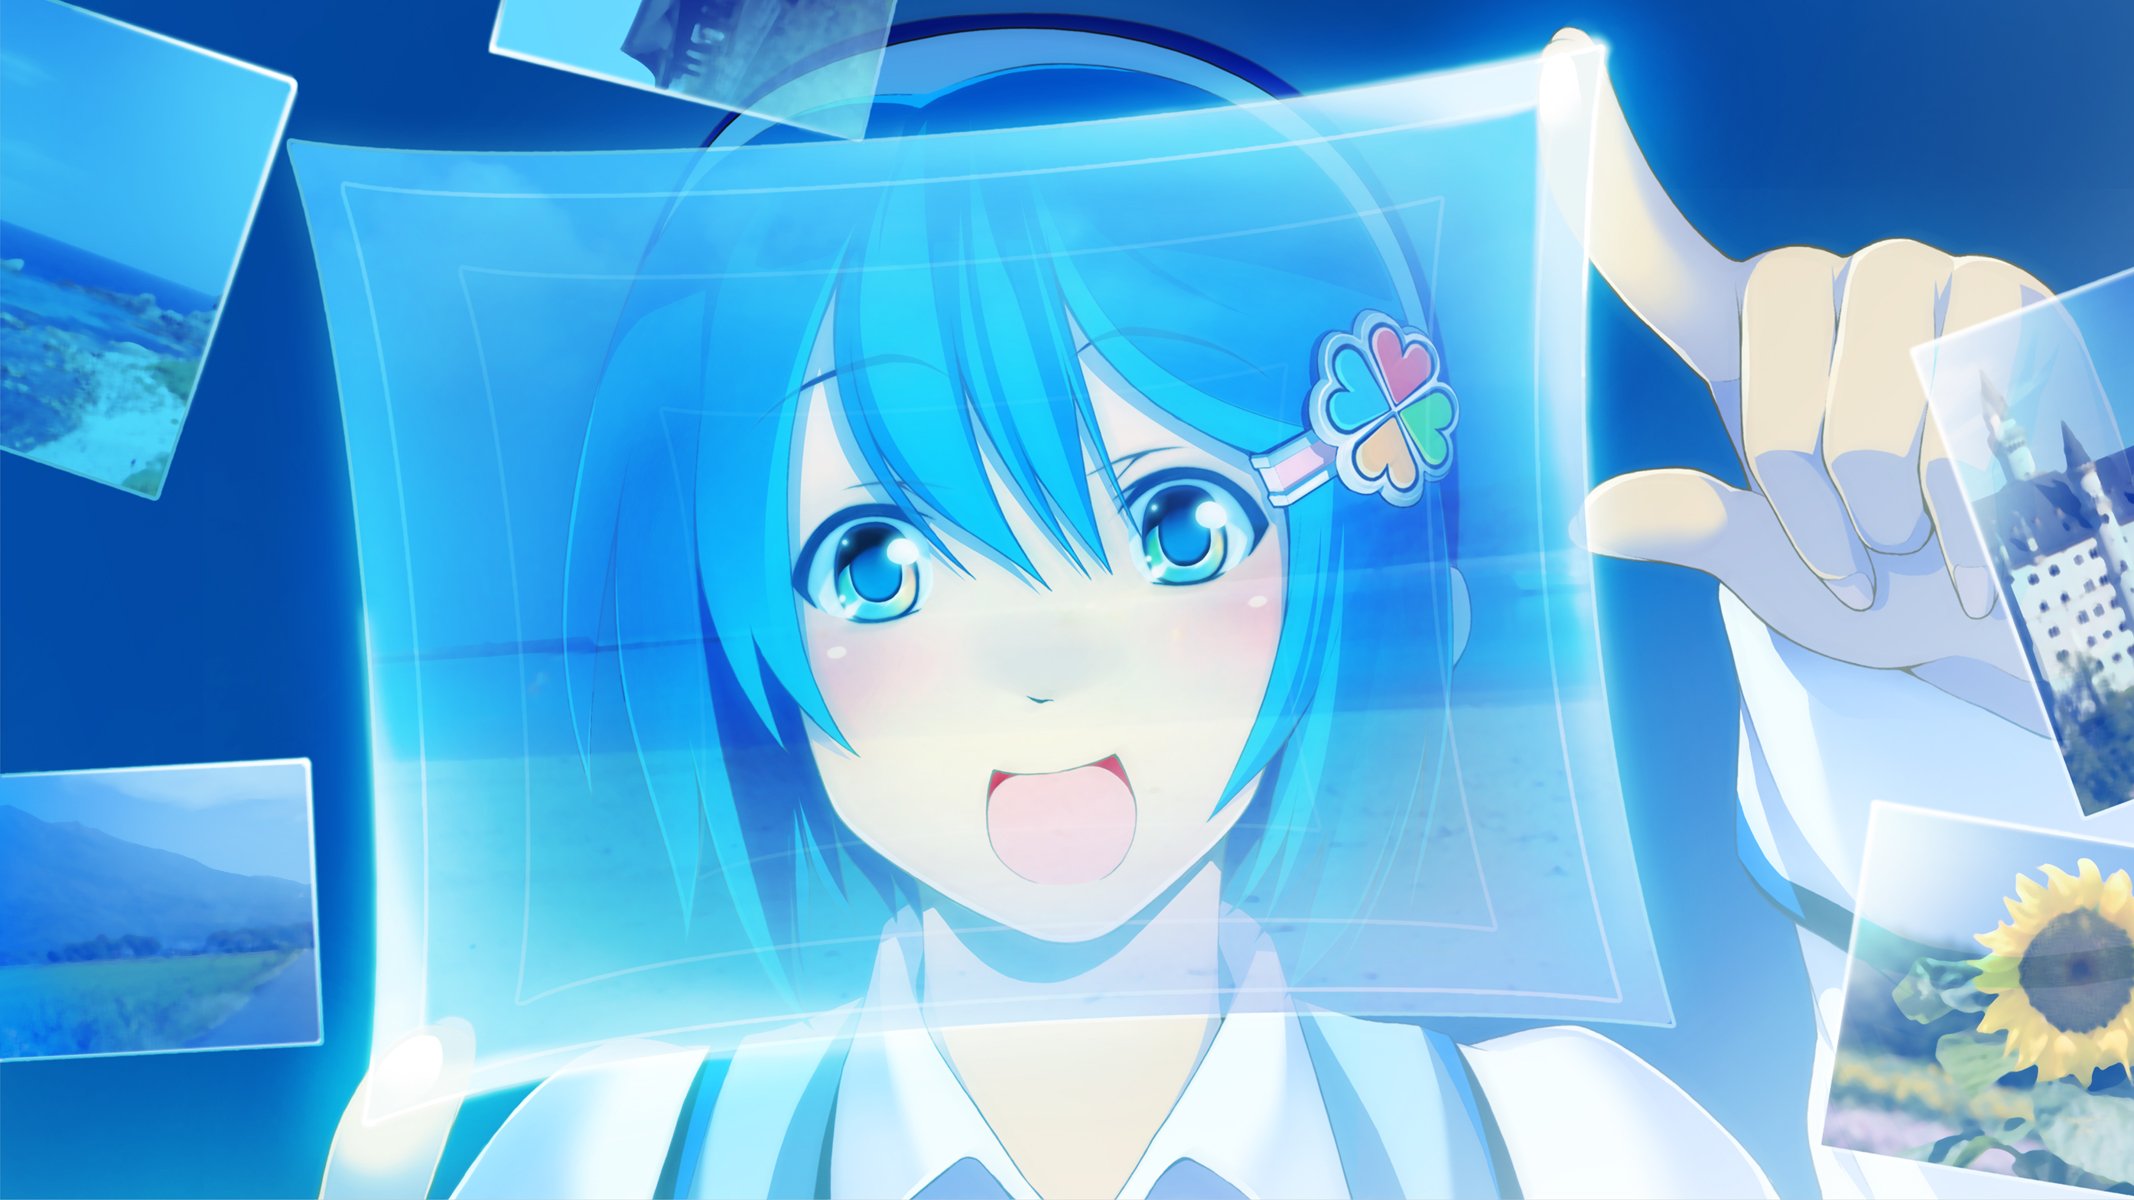 Anime Girl Wallpaper Windows 10 - WallpaperSafari